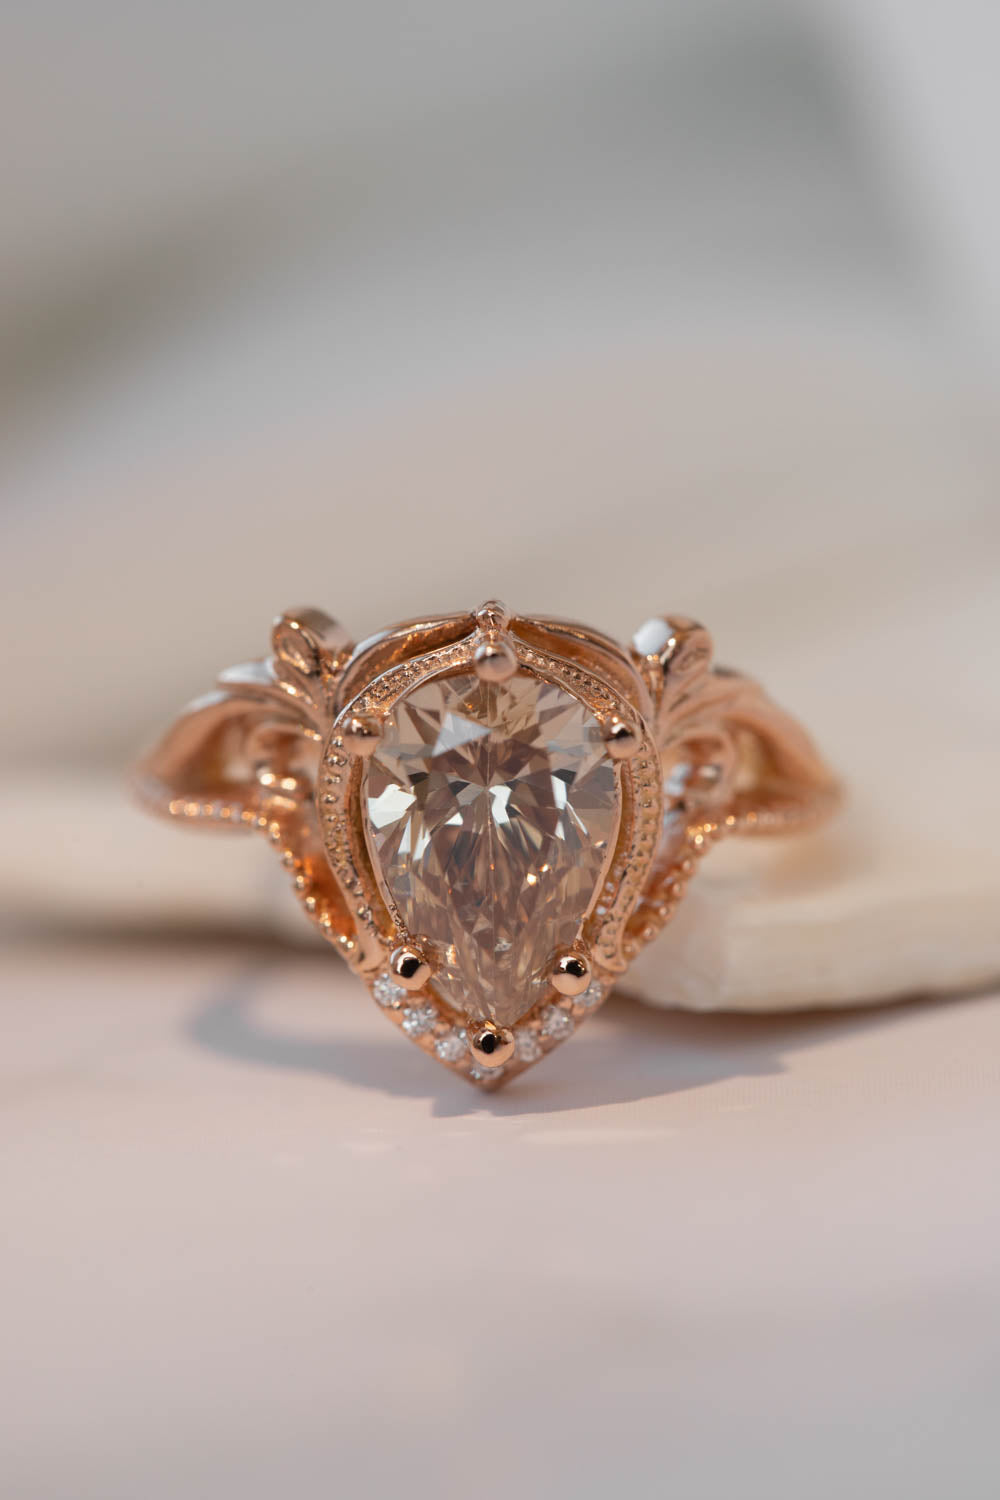 Diamond Ring | Big diamond engagement rings, Expensive wedding rings, Big  wedding rings